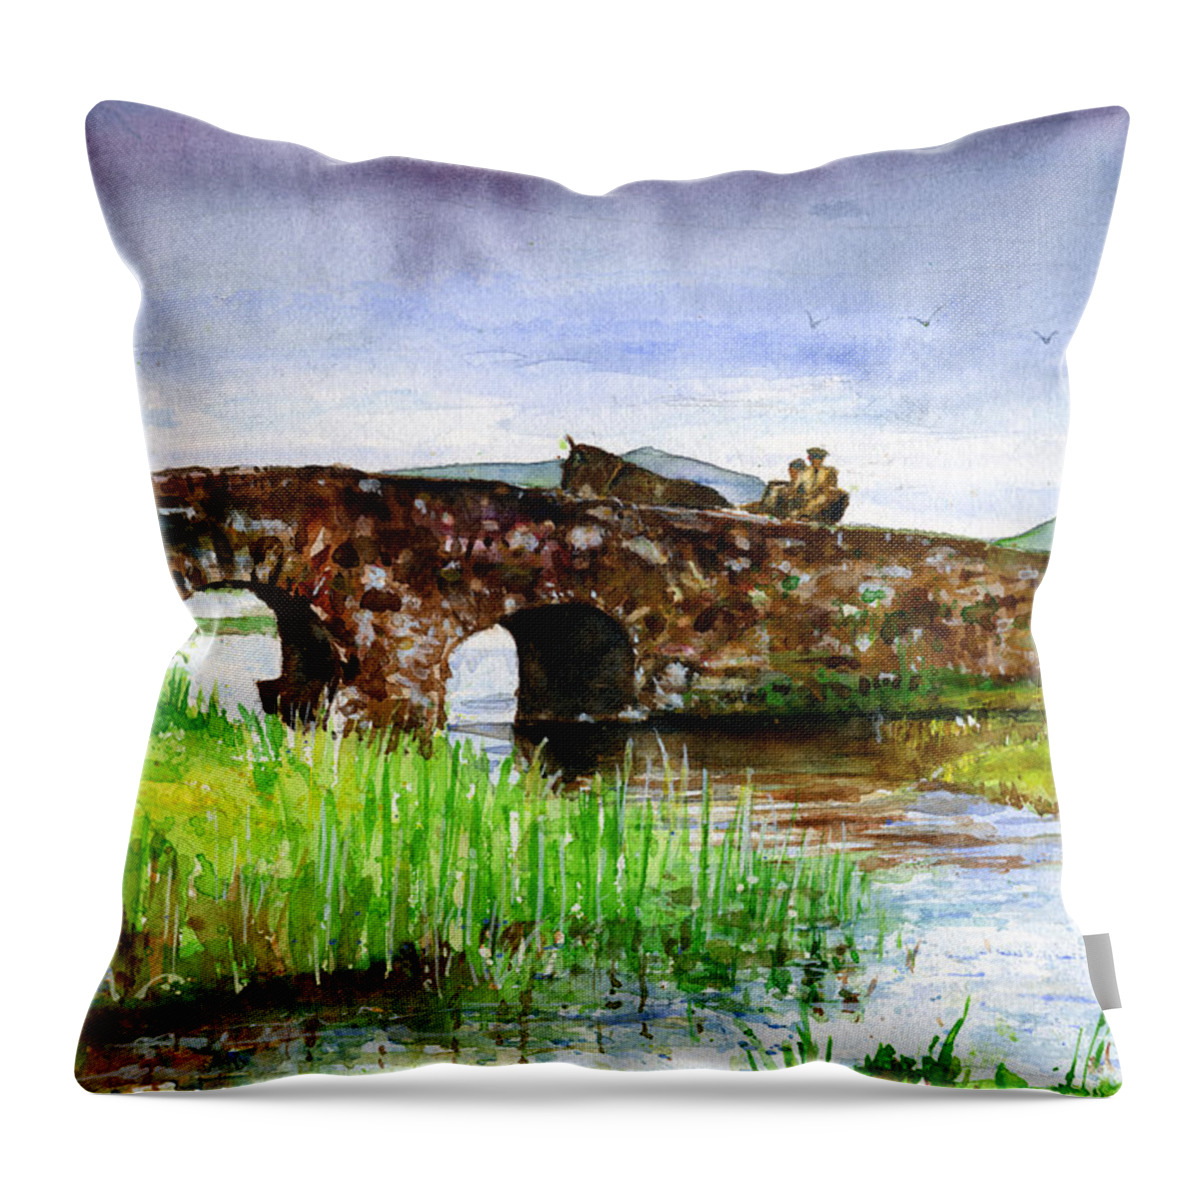 Quiet Man Throw Pillow featuring the painting Quiet Man Bridge Ireland by John D Benson